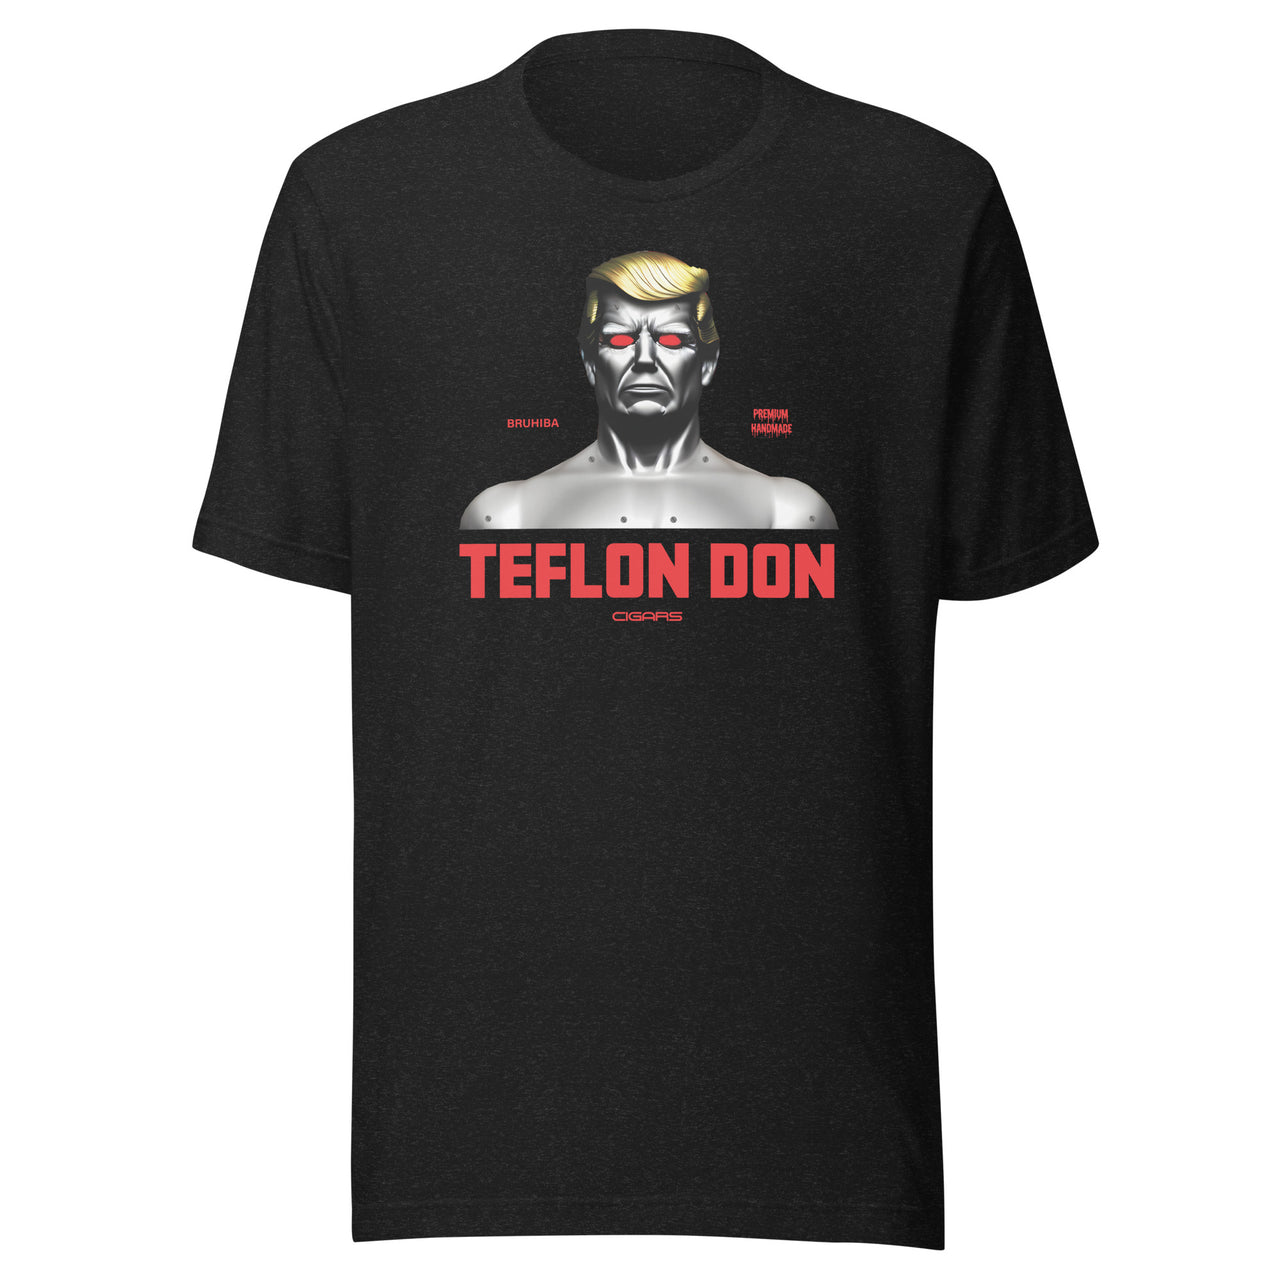 BRUHIBA "Teflon Don" Graphic T-Shirt